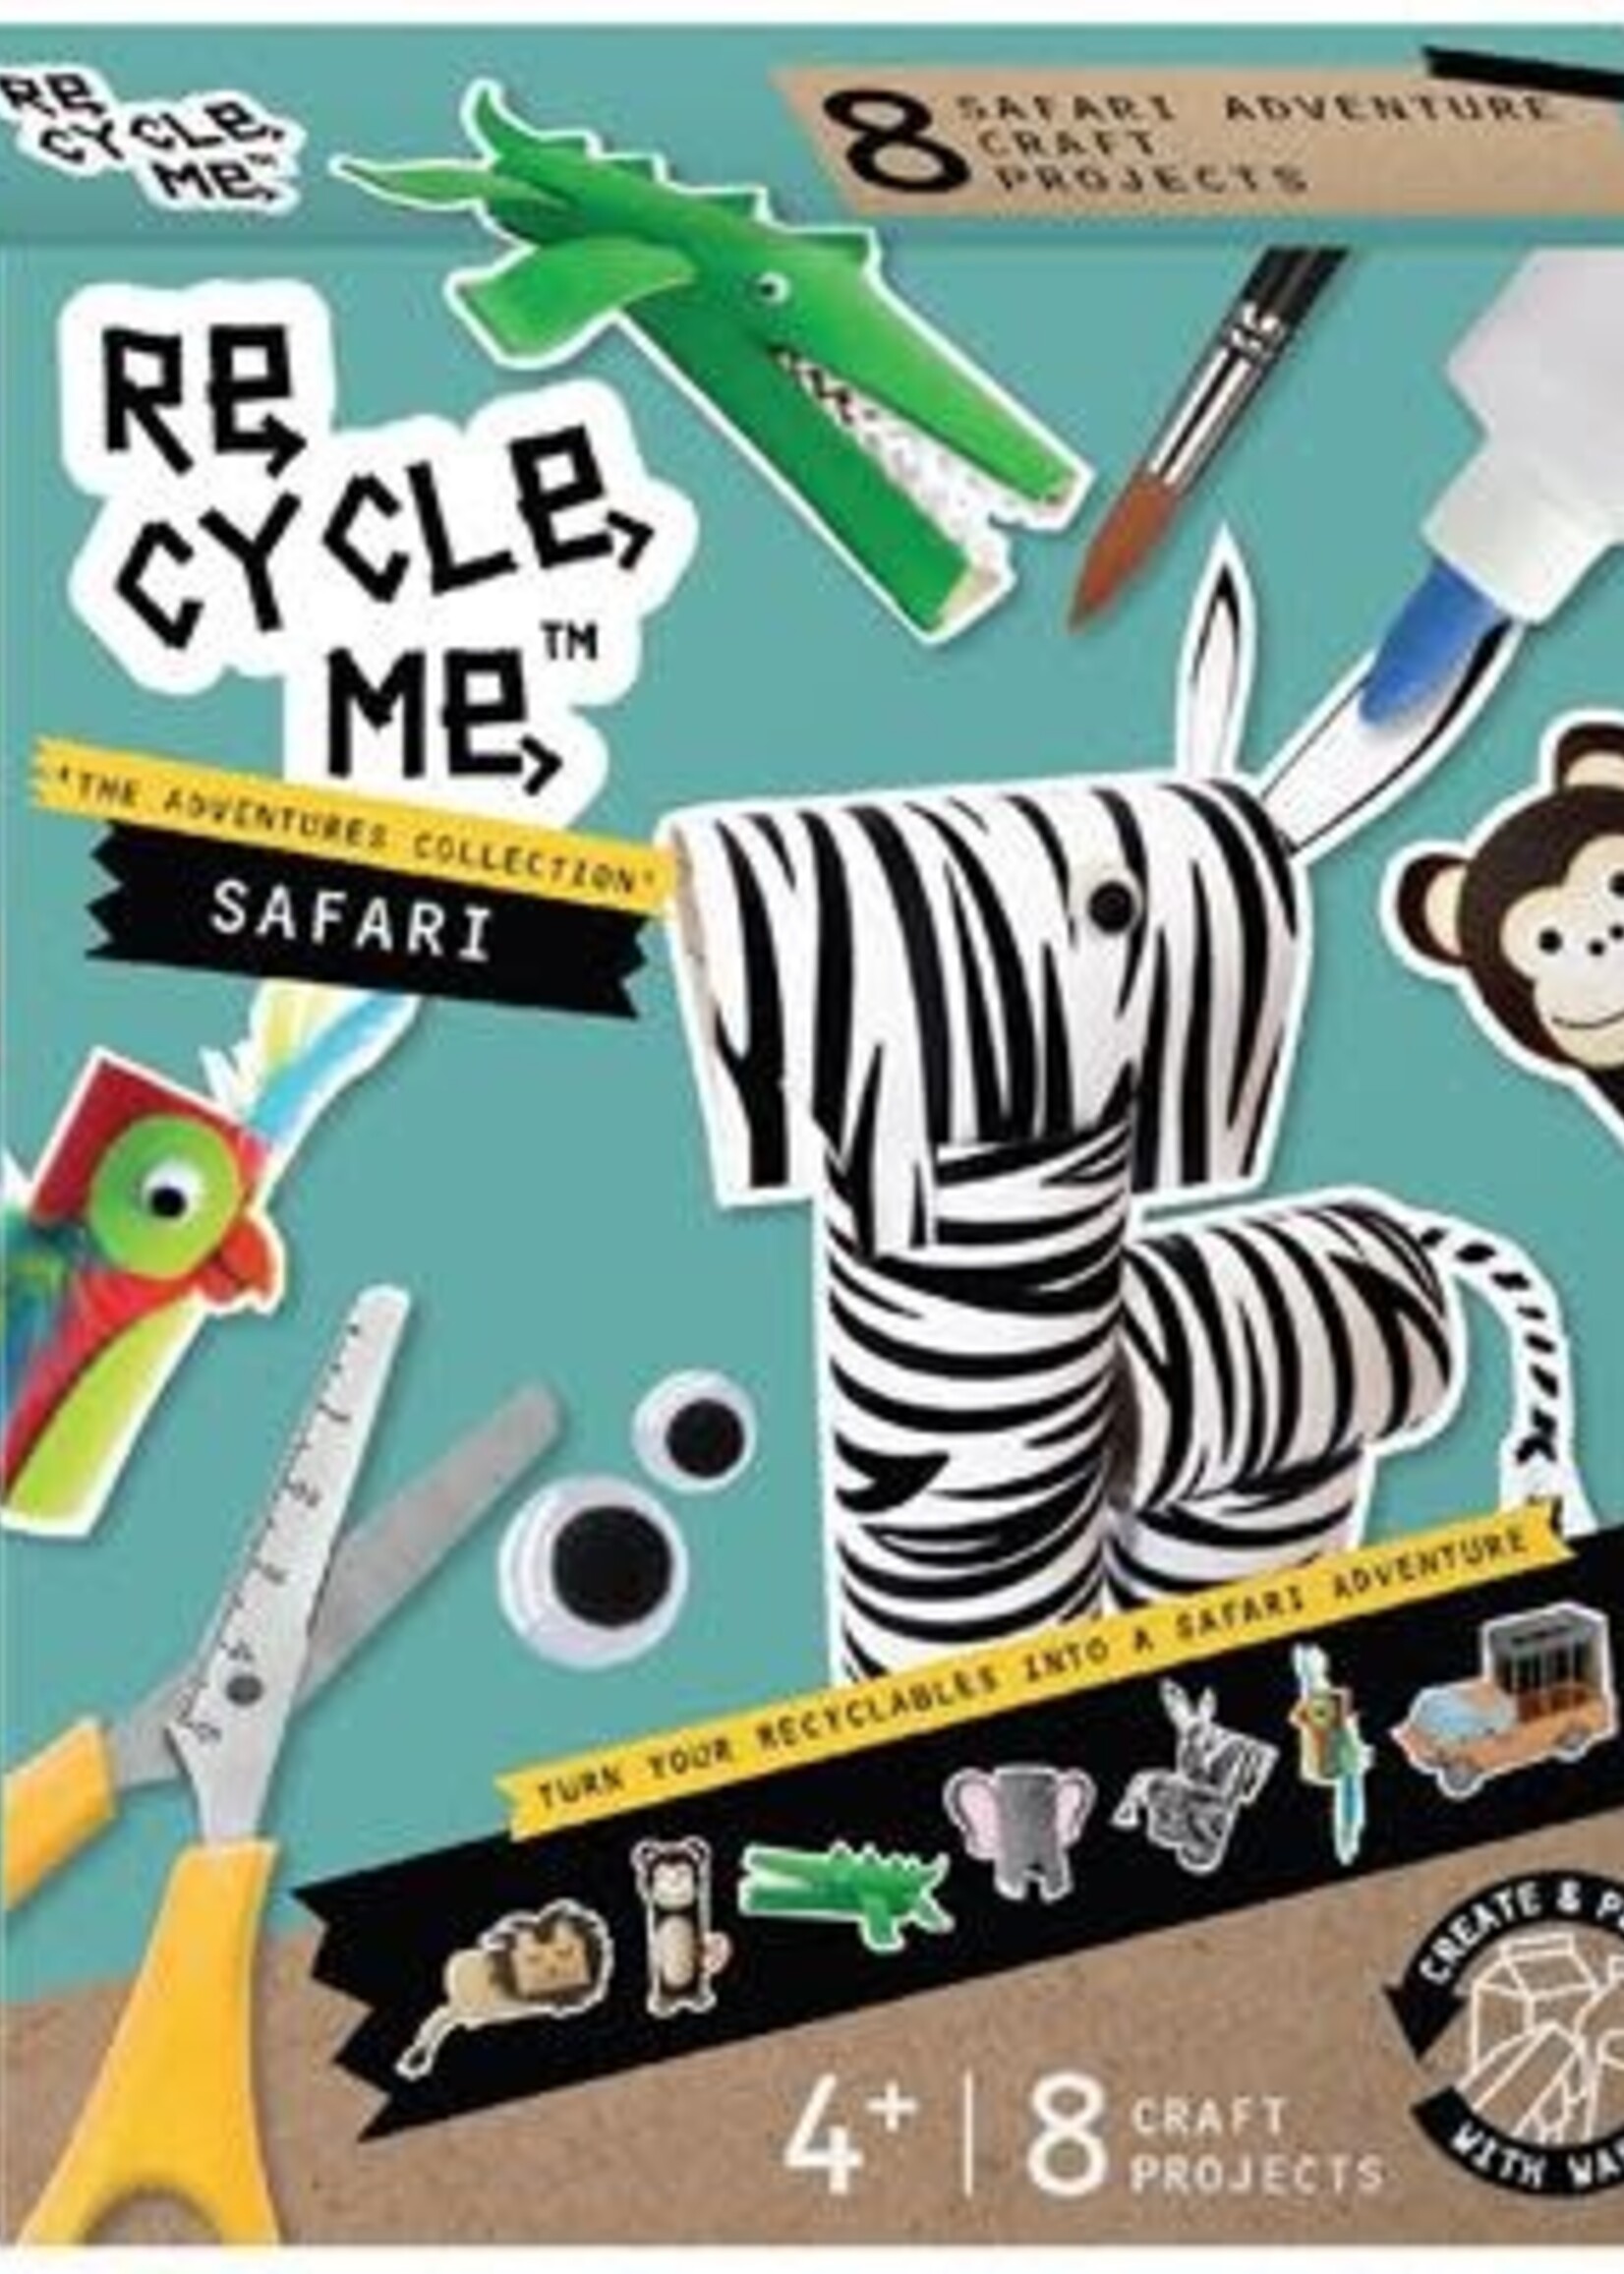 Re-cycle me Re-cycle me Safari